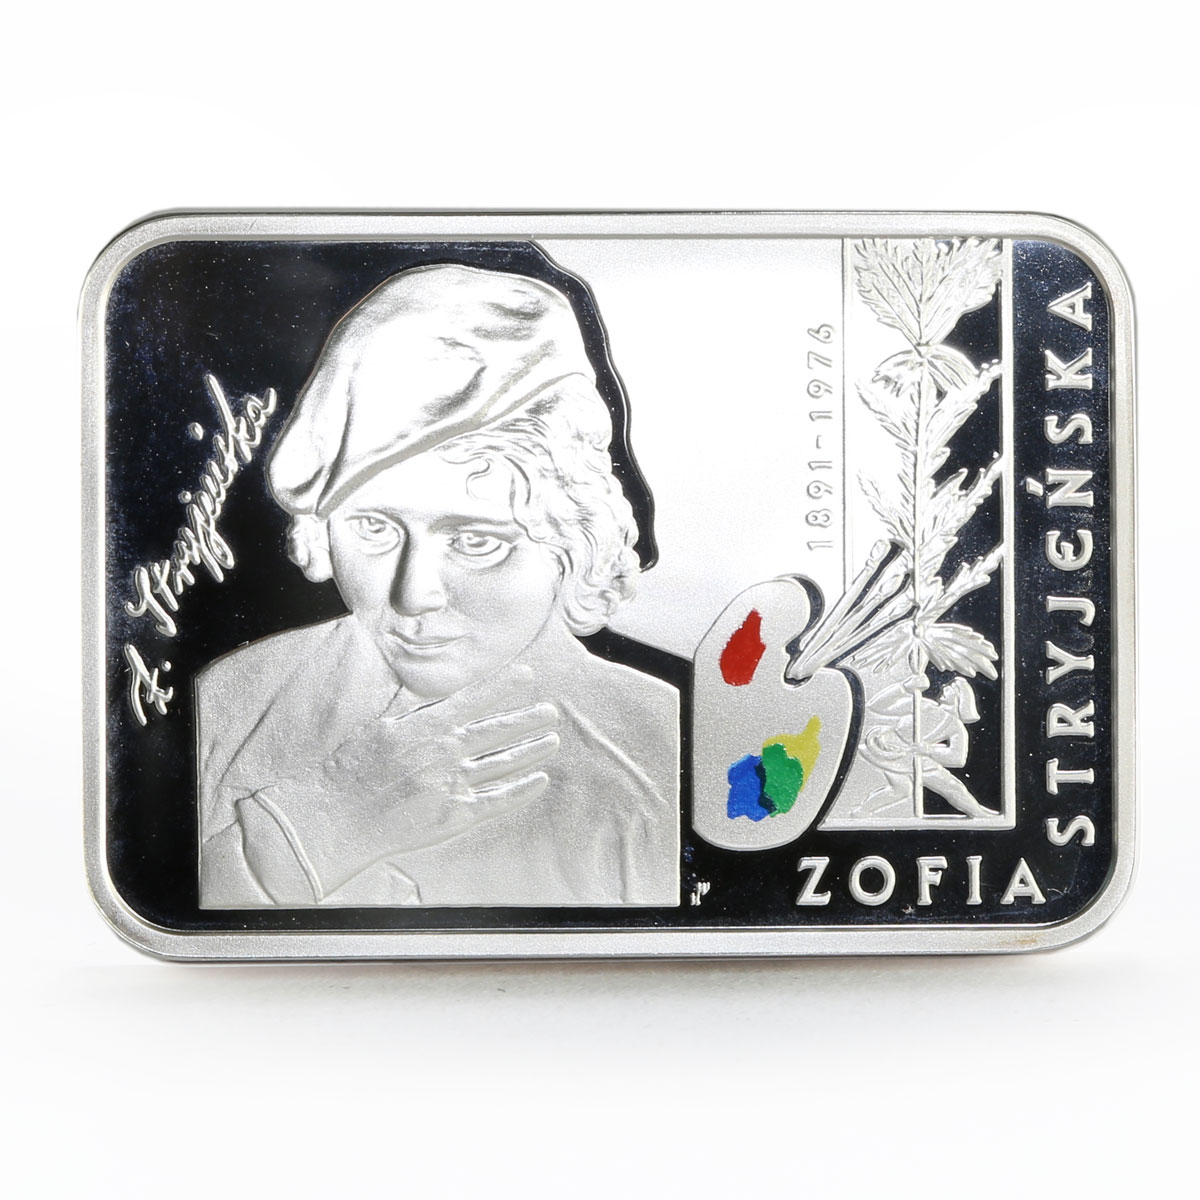 Poland 20 zlotych Famous Painters series Zofia Stryjenska Art silver coin 2011